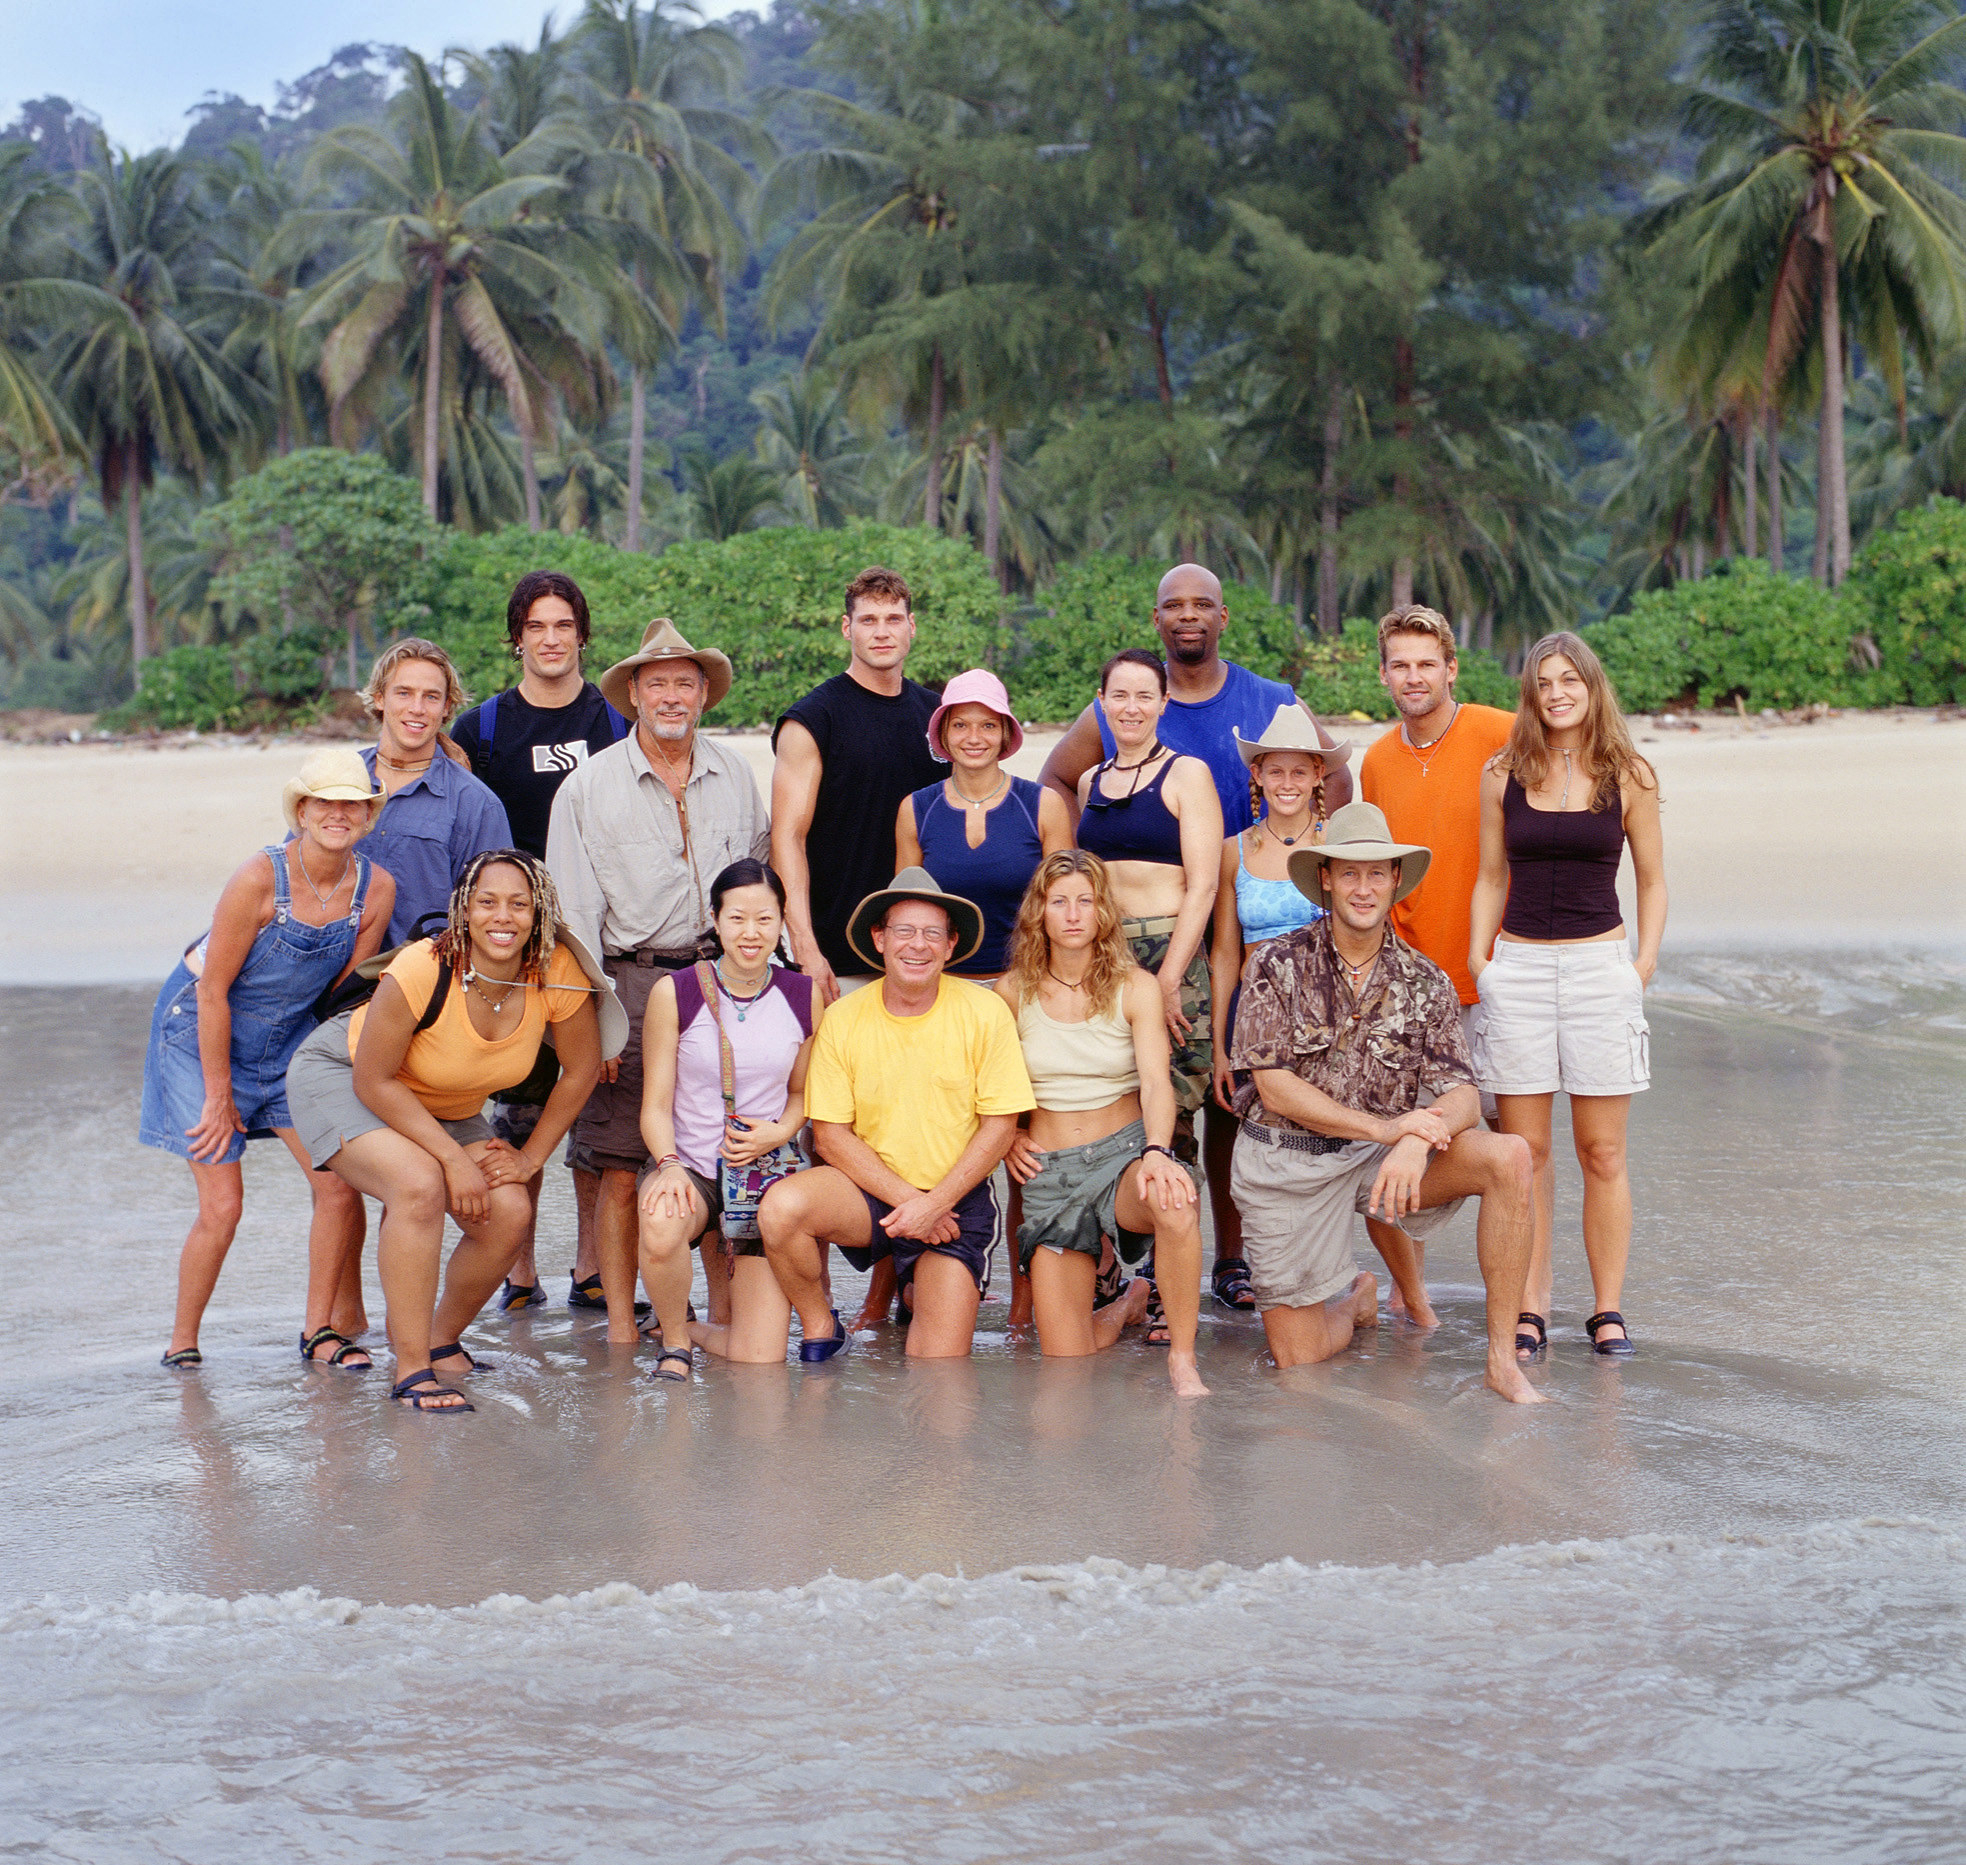 The cast of Survivor: Thailand